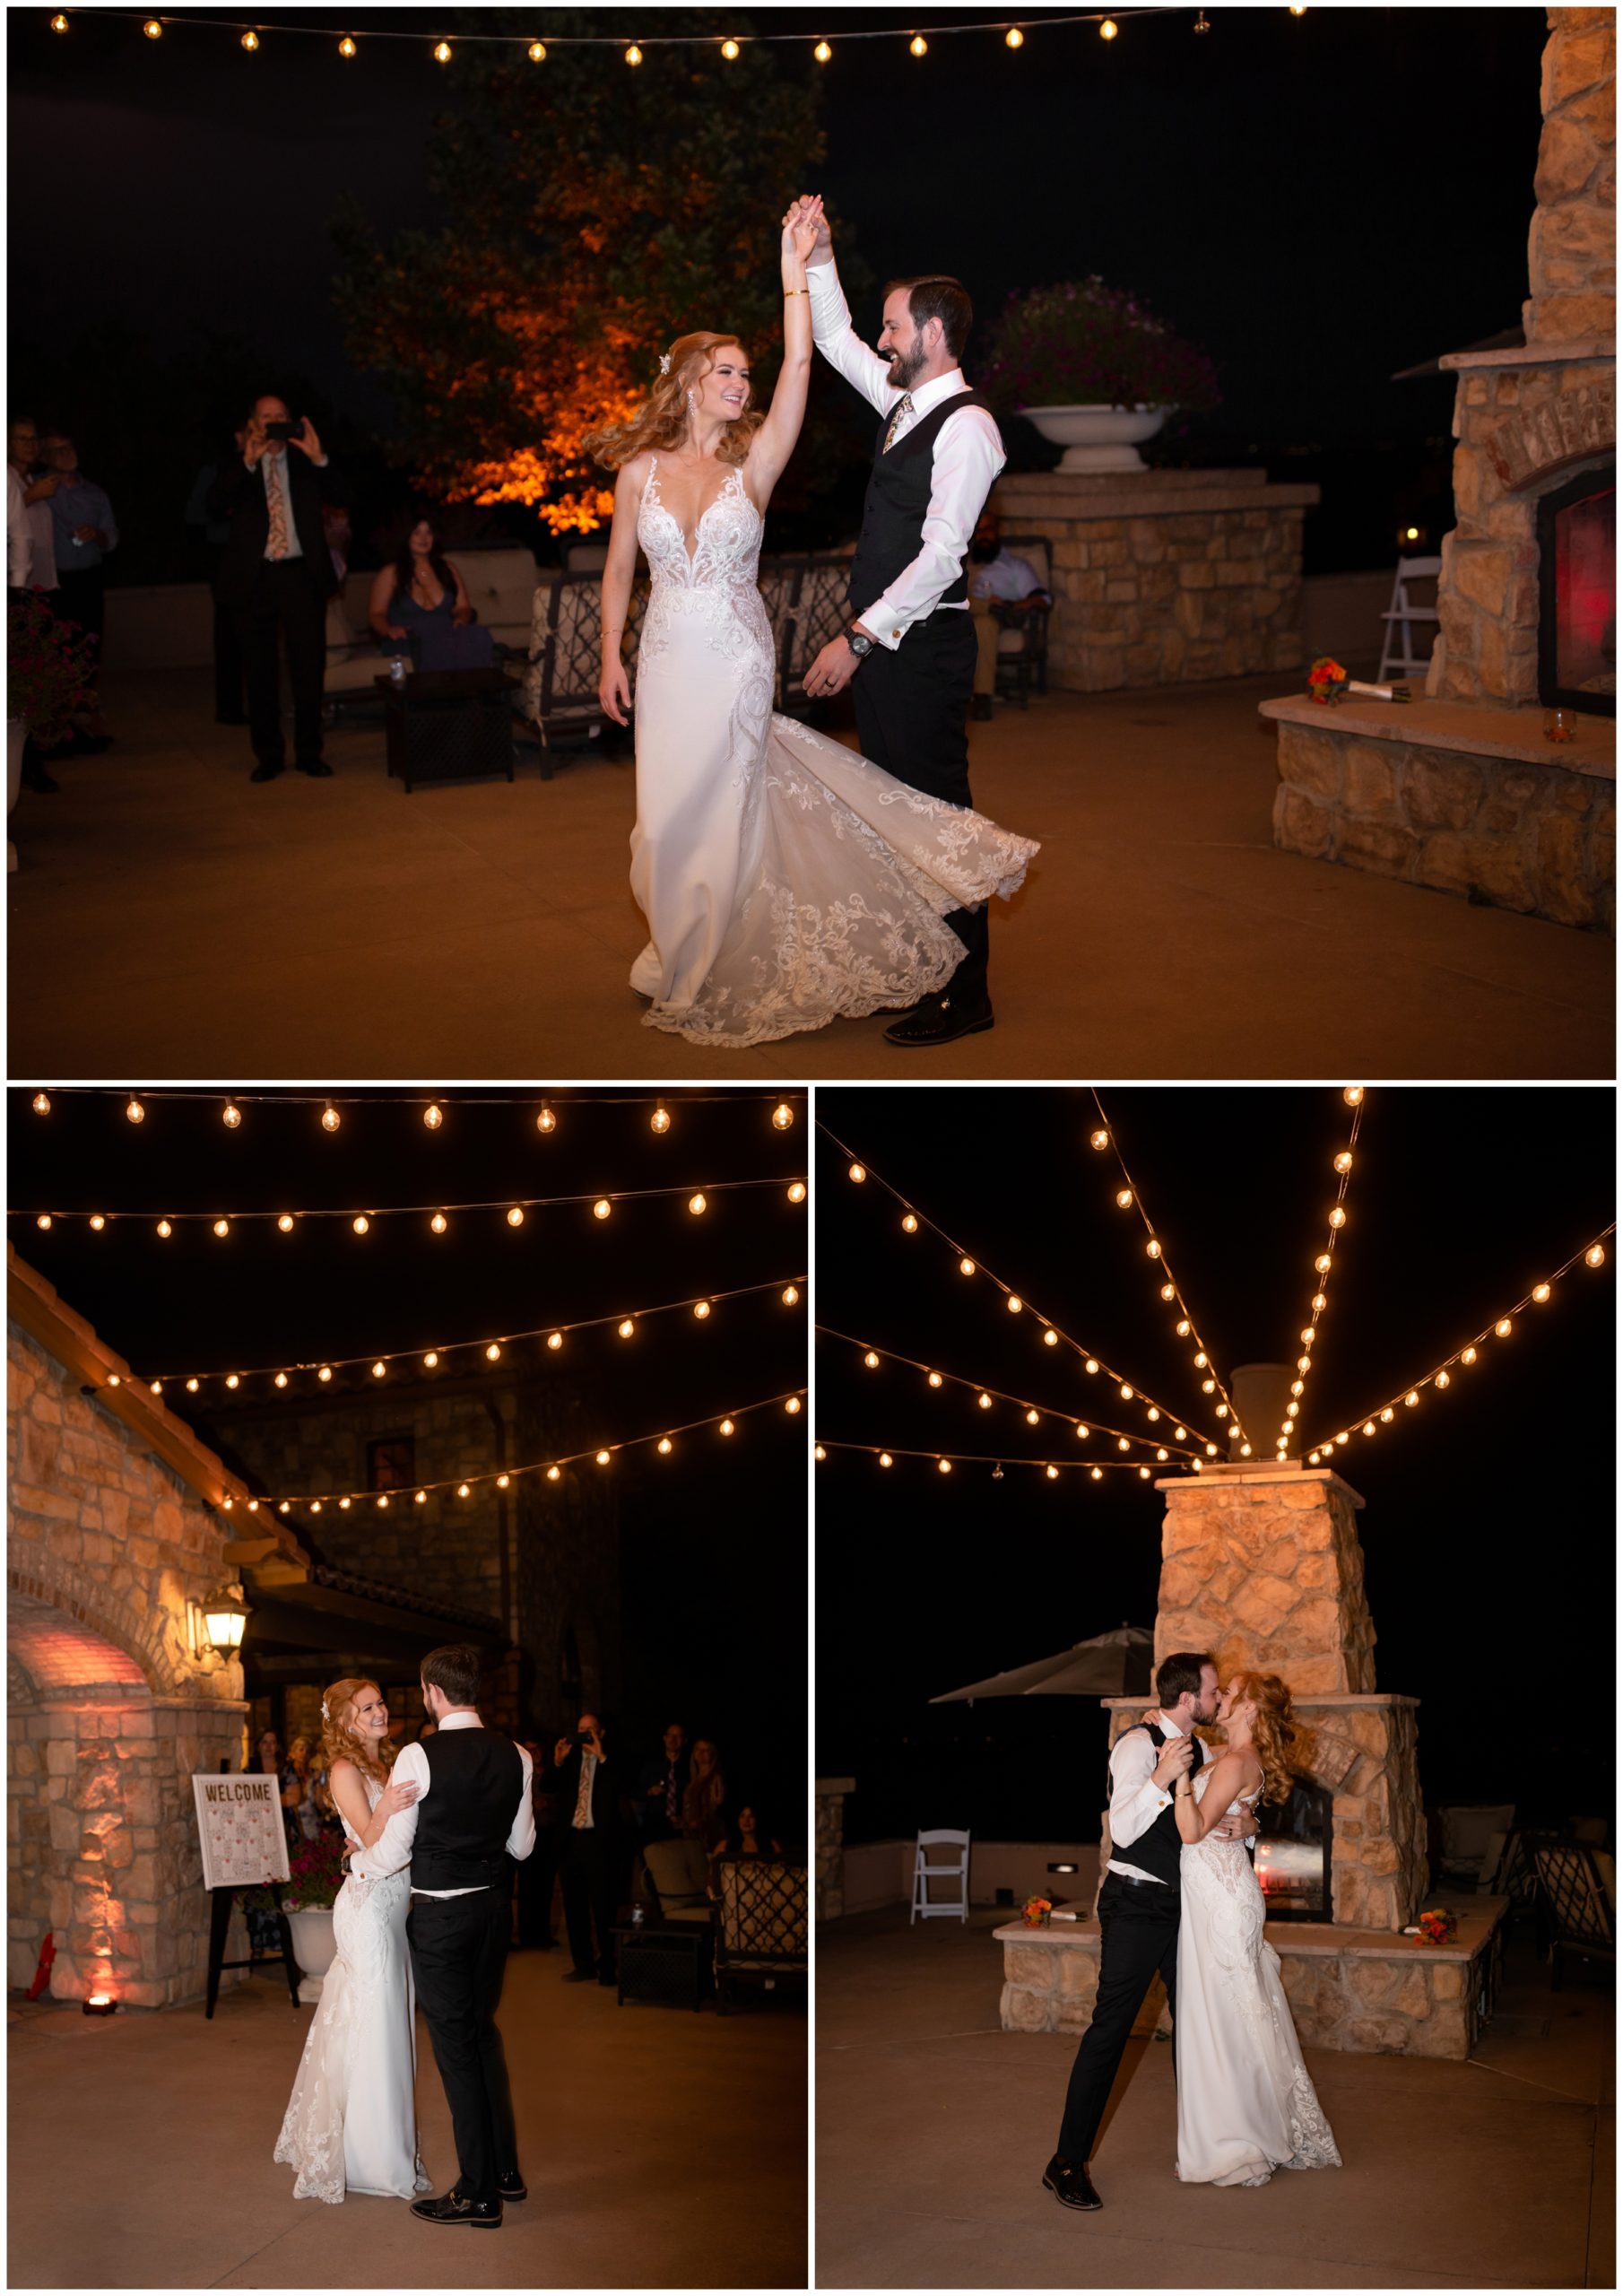 first dance outdoors under white market lights at Solterra Colorado wedding reception 